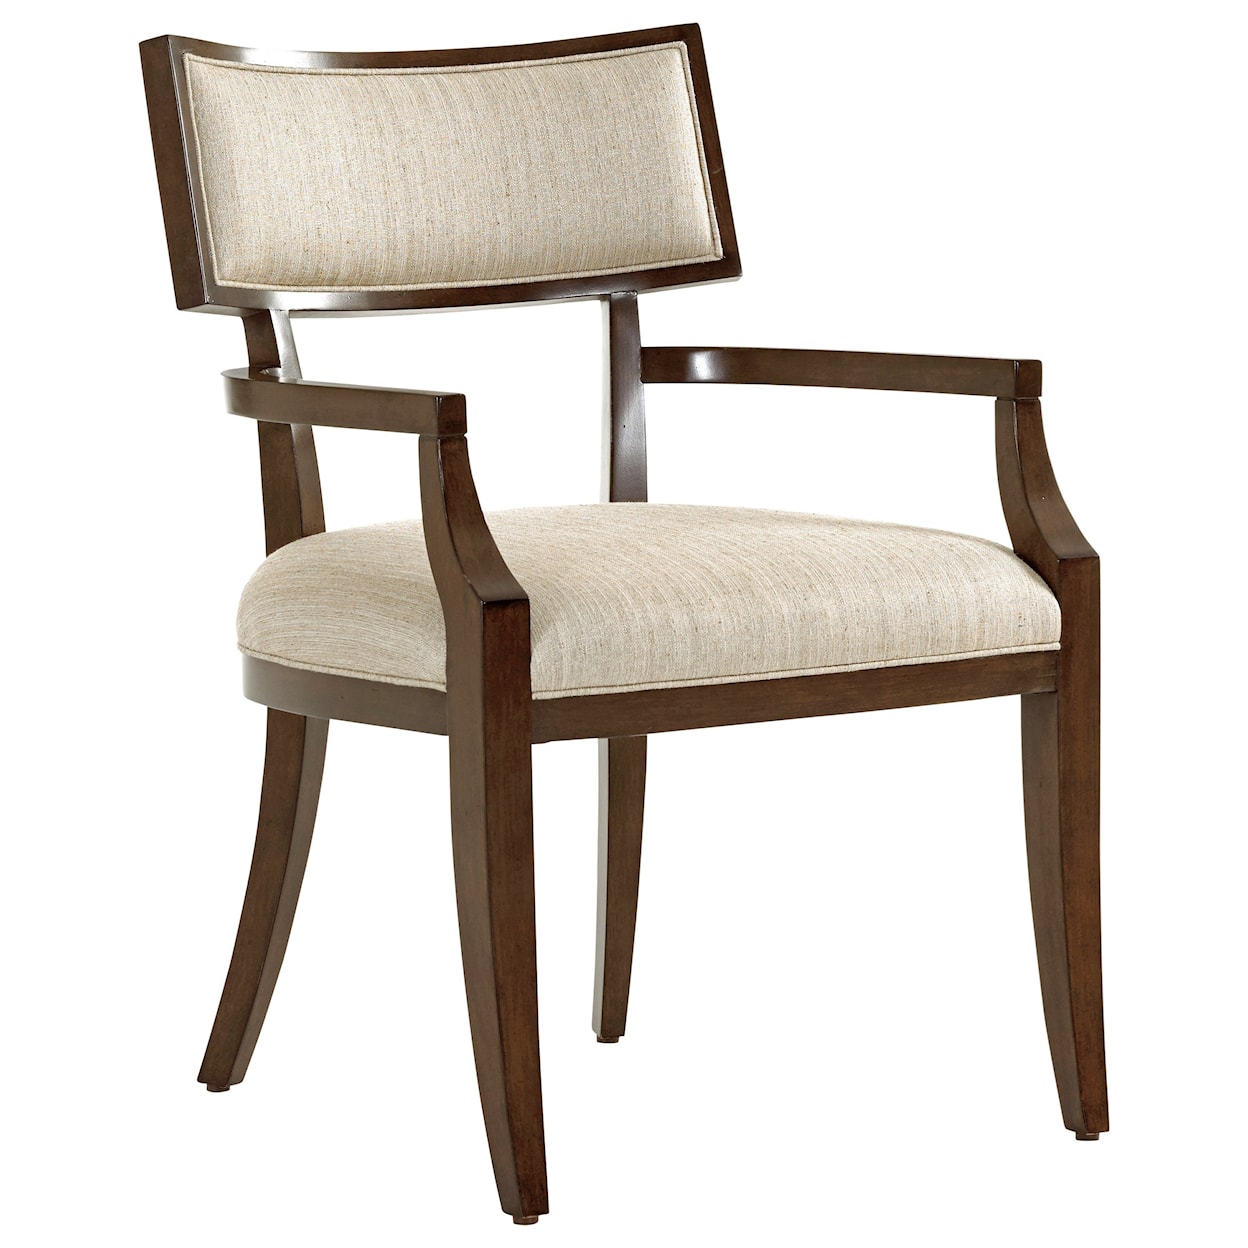 Lexington MacArthur Park Whittier Arm Chair in Wheat Fabric